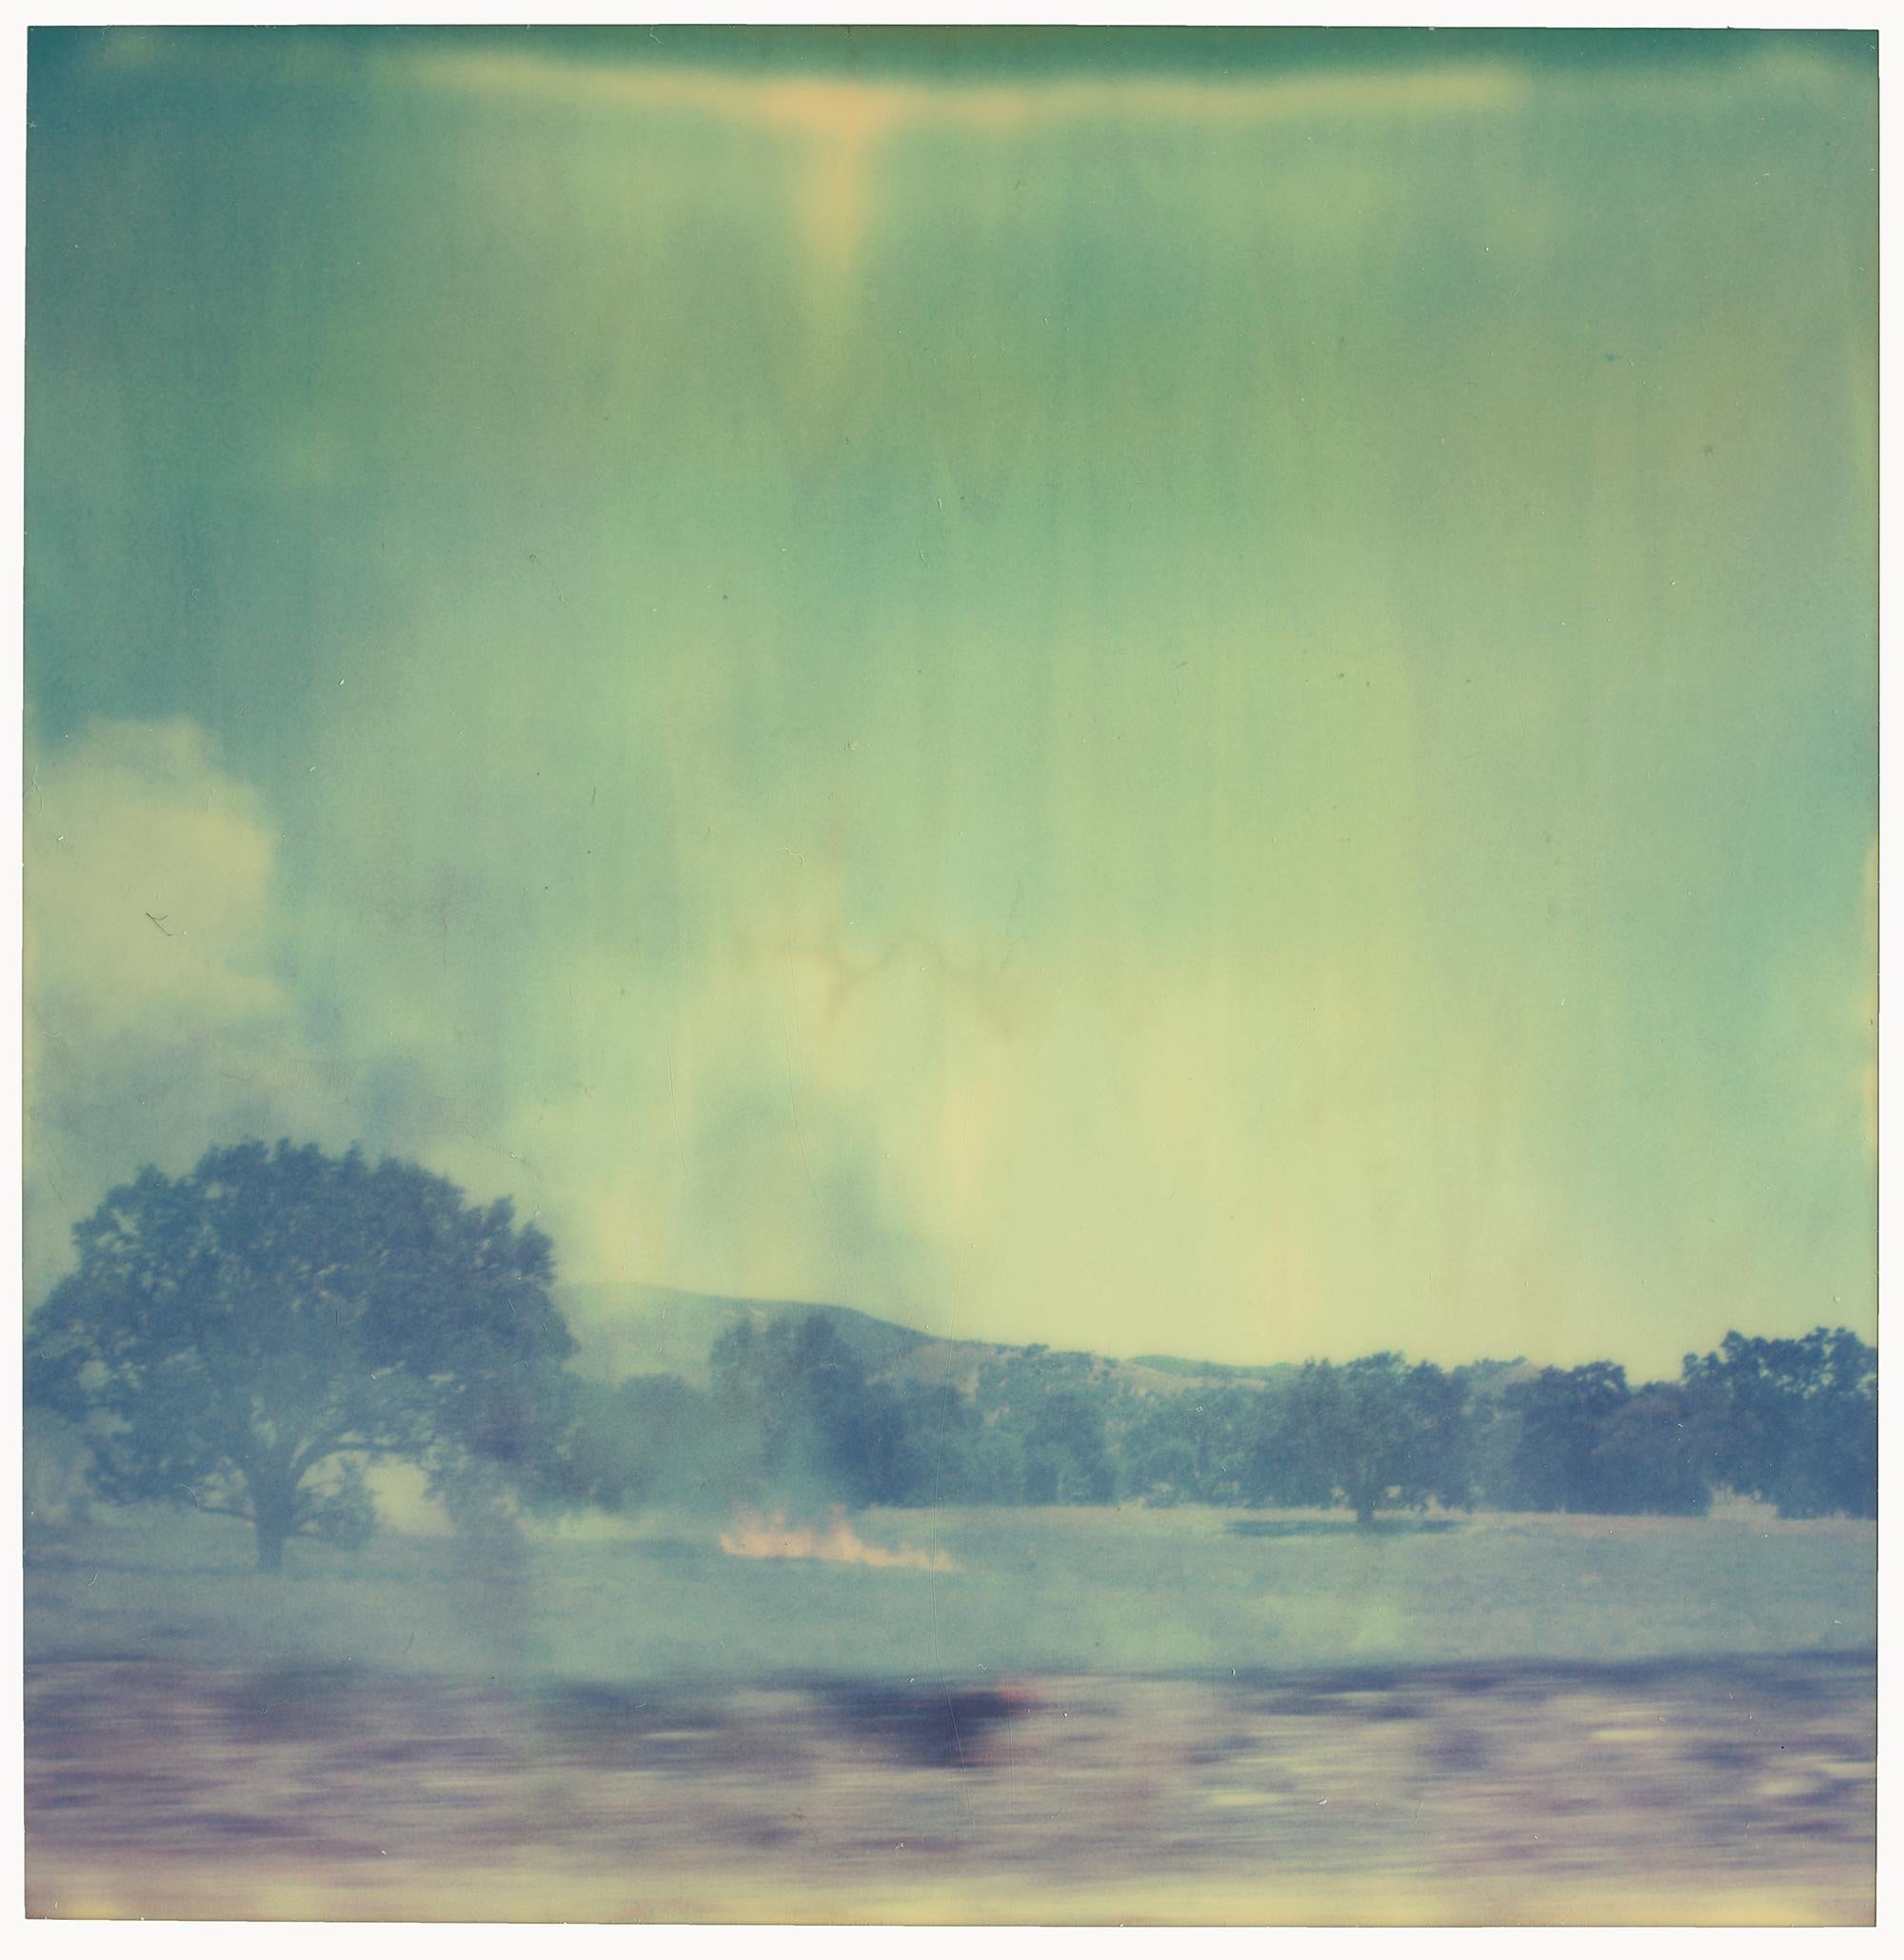 Stefanie Schneider Landscape Photograph – Burning Field IV (Last Picture Show) - Polaroid, Contemporary